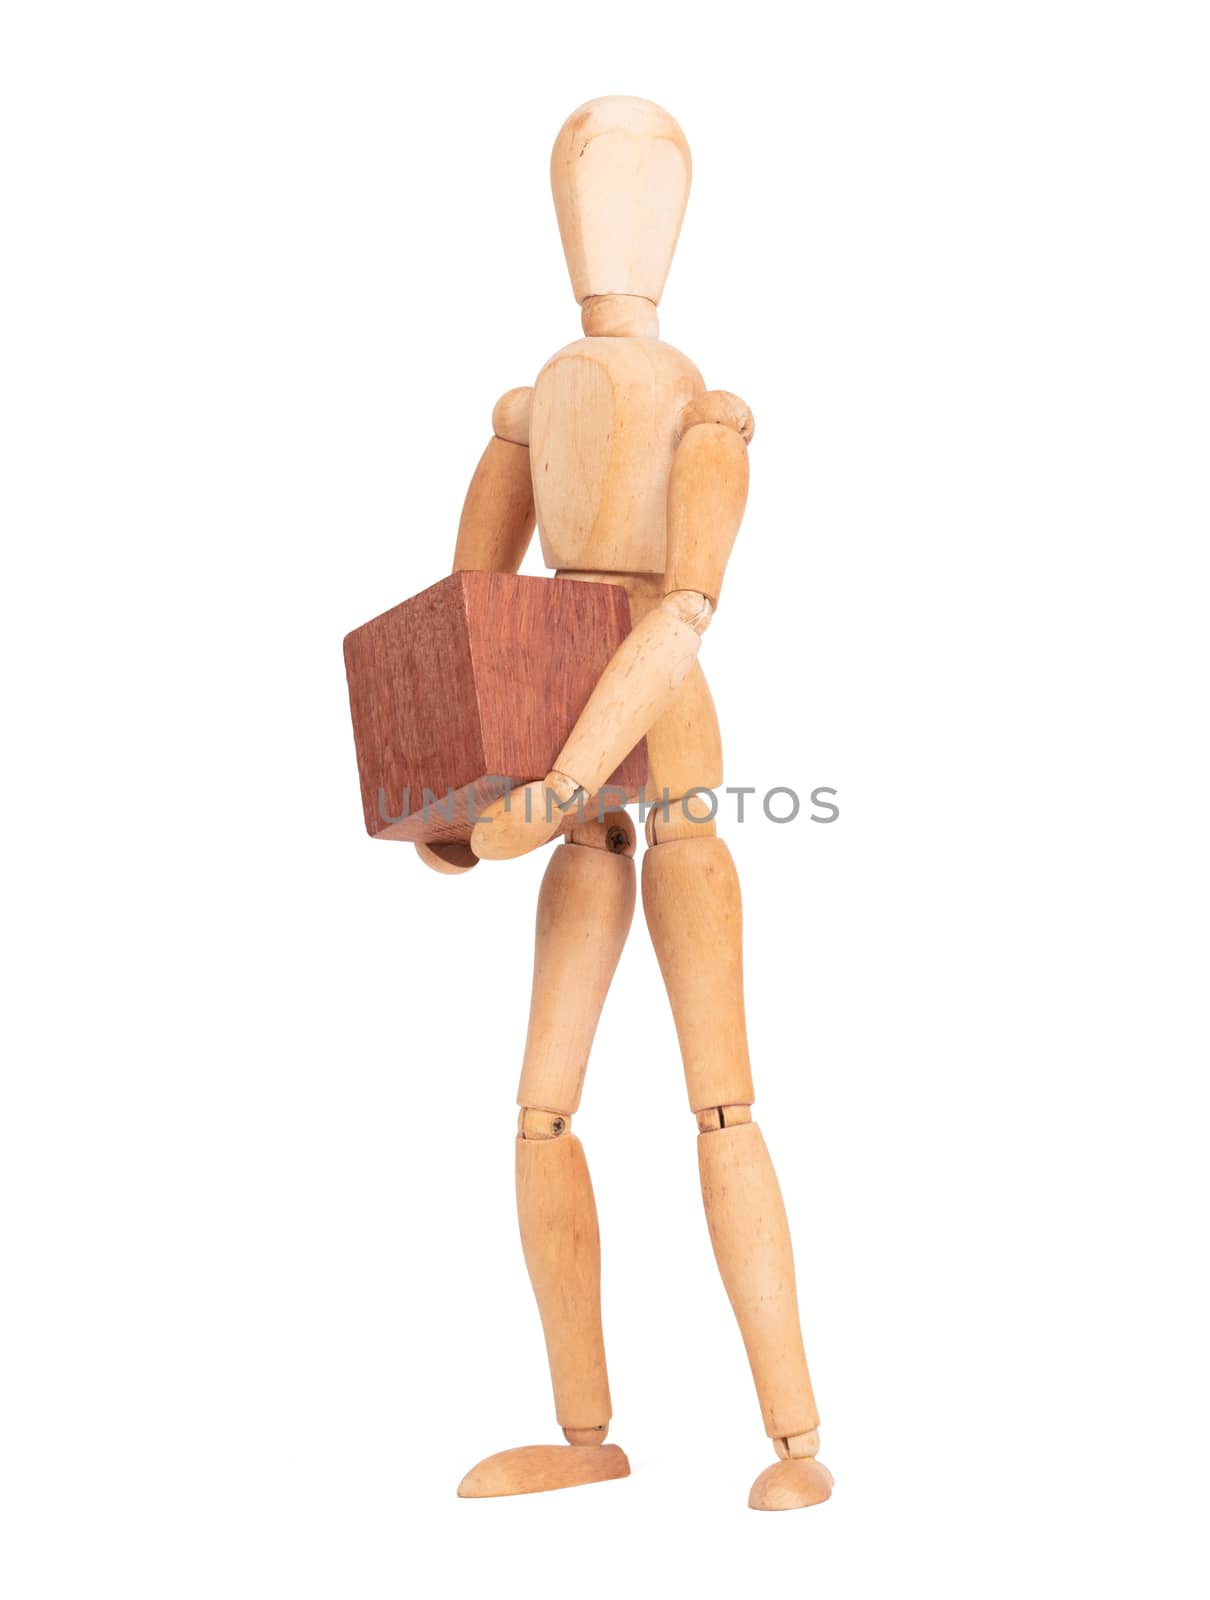 Wooden mannequin carrying a wooden hardwood block by michaklootwijk